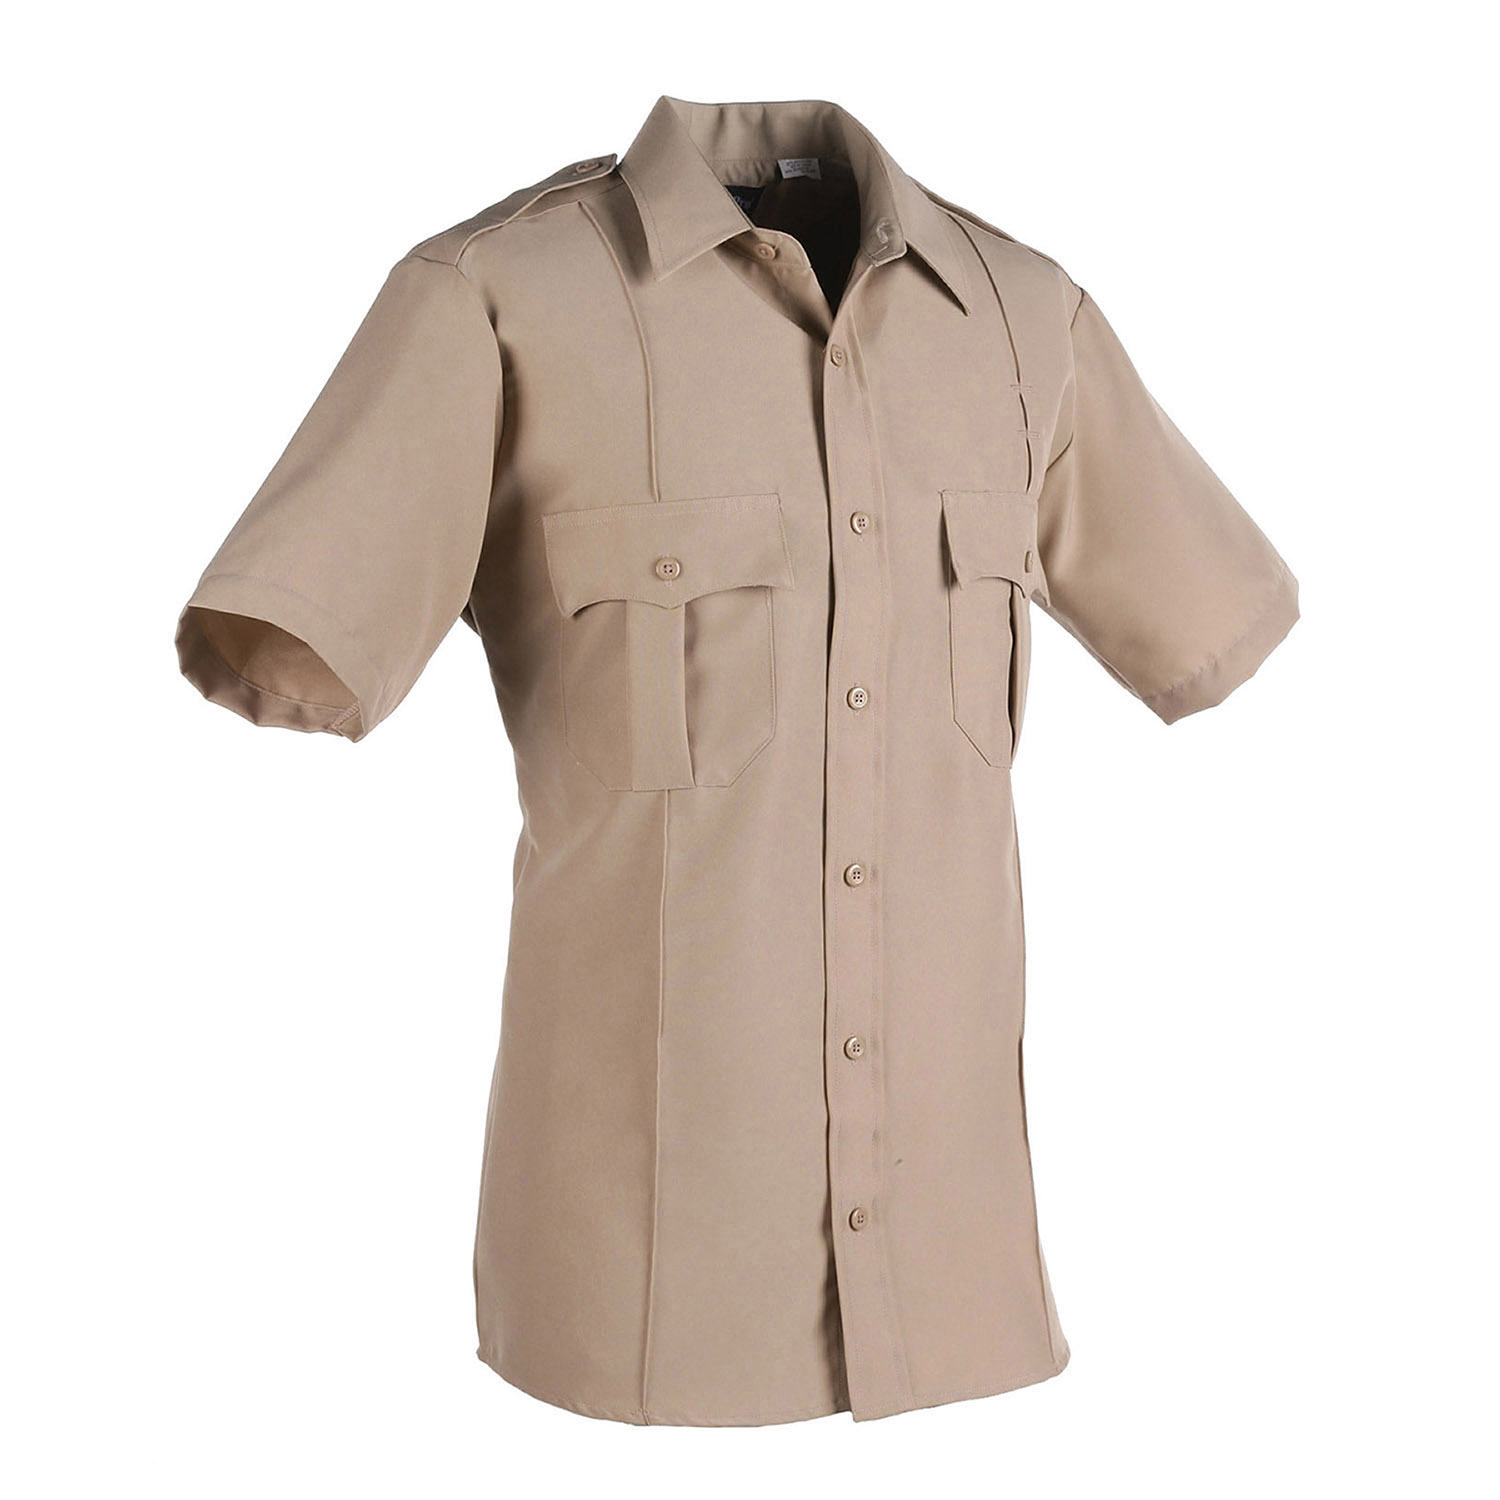 ADC Short Sleeve Uniform Shirt Item